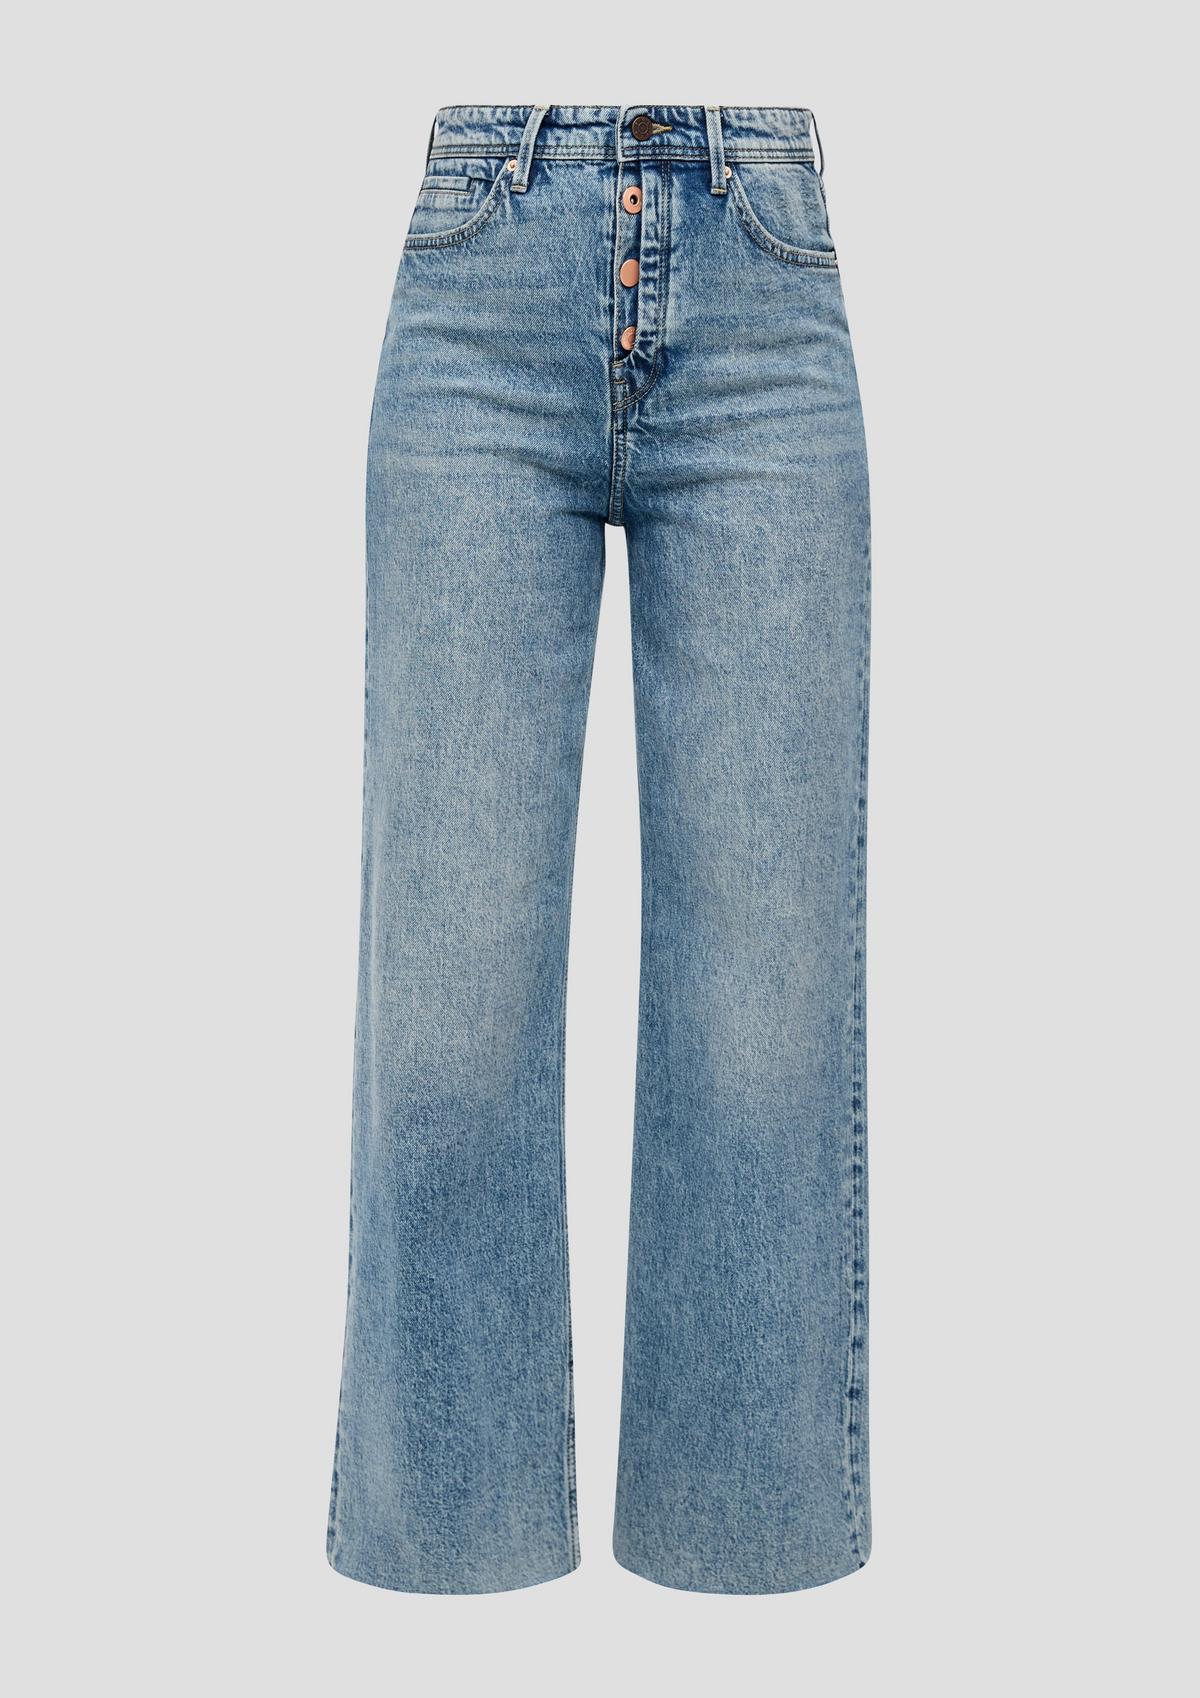 s.Oliver Suri jeans / high rise / wide leg